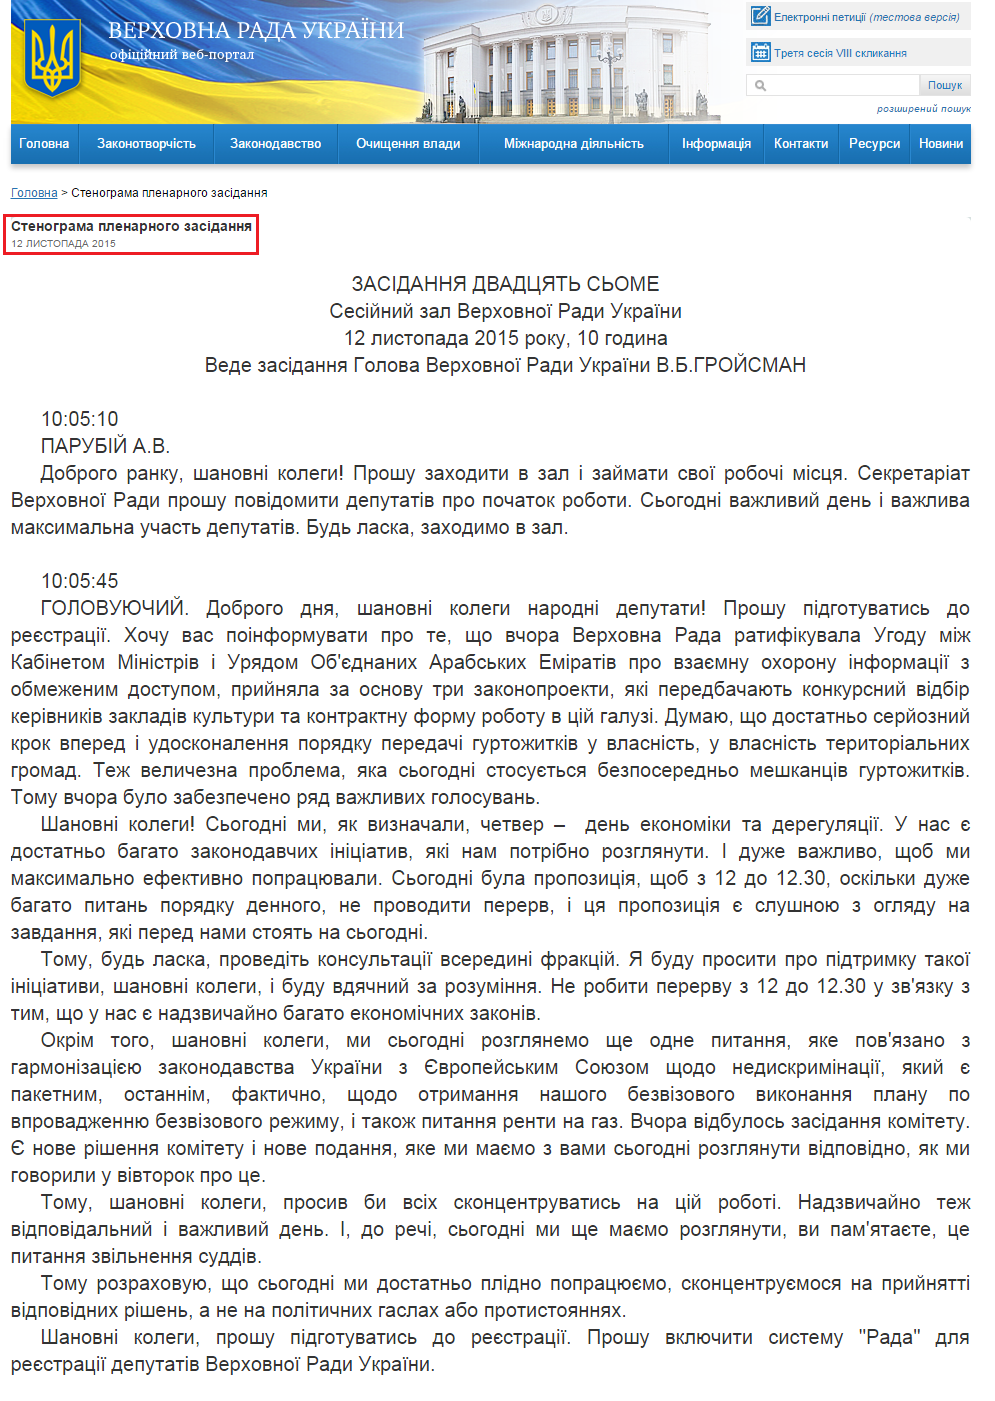 http://iportal.rada.gov.ua/meeting/stenogr/show/6038.html